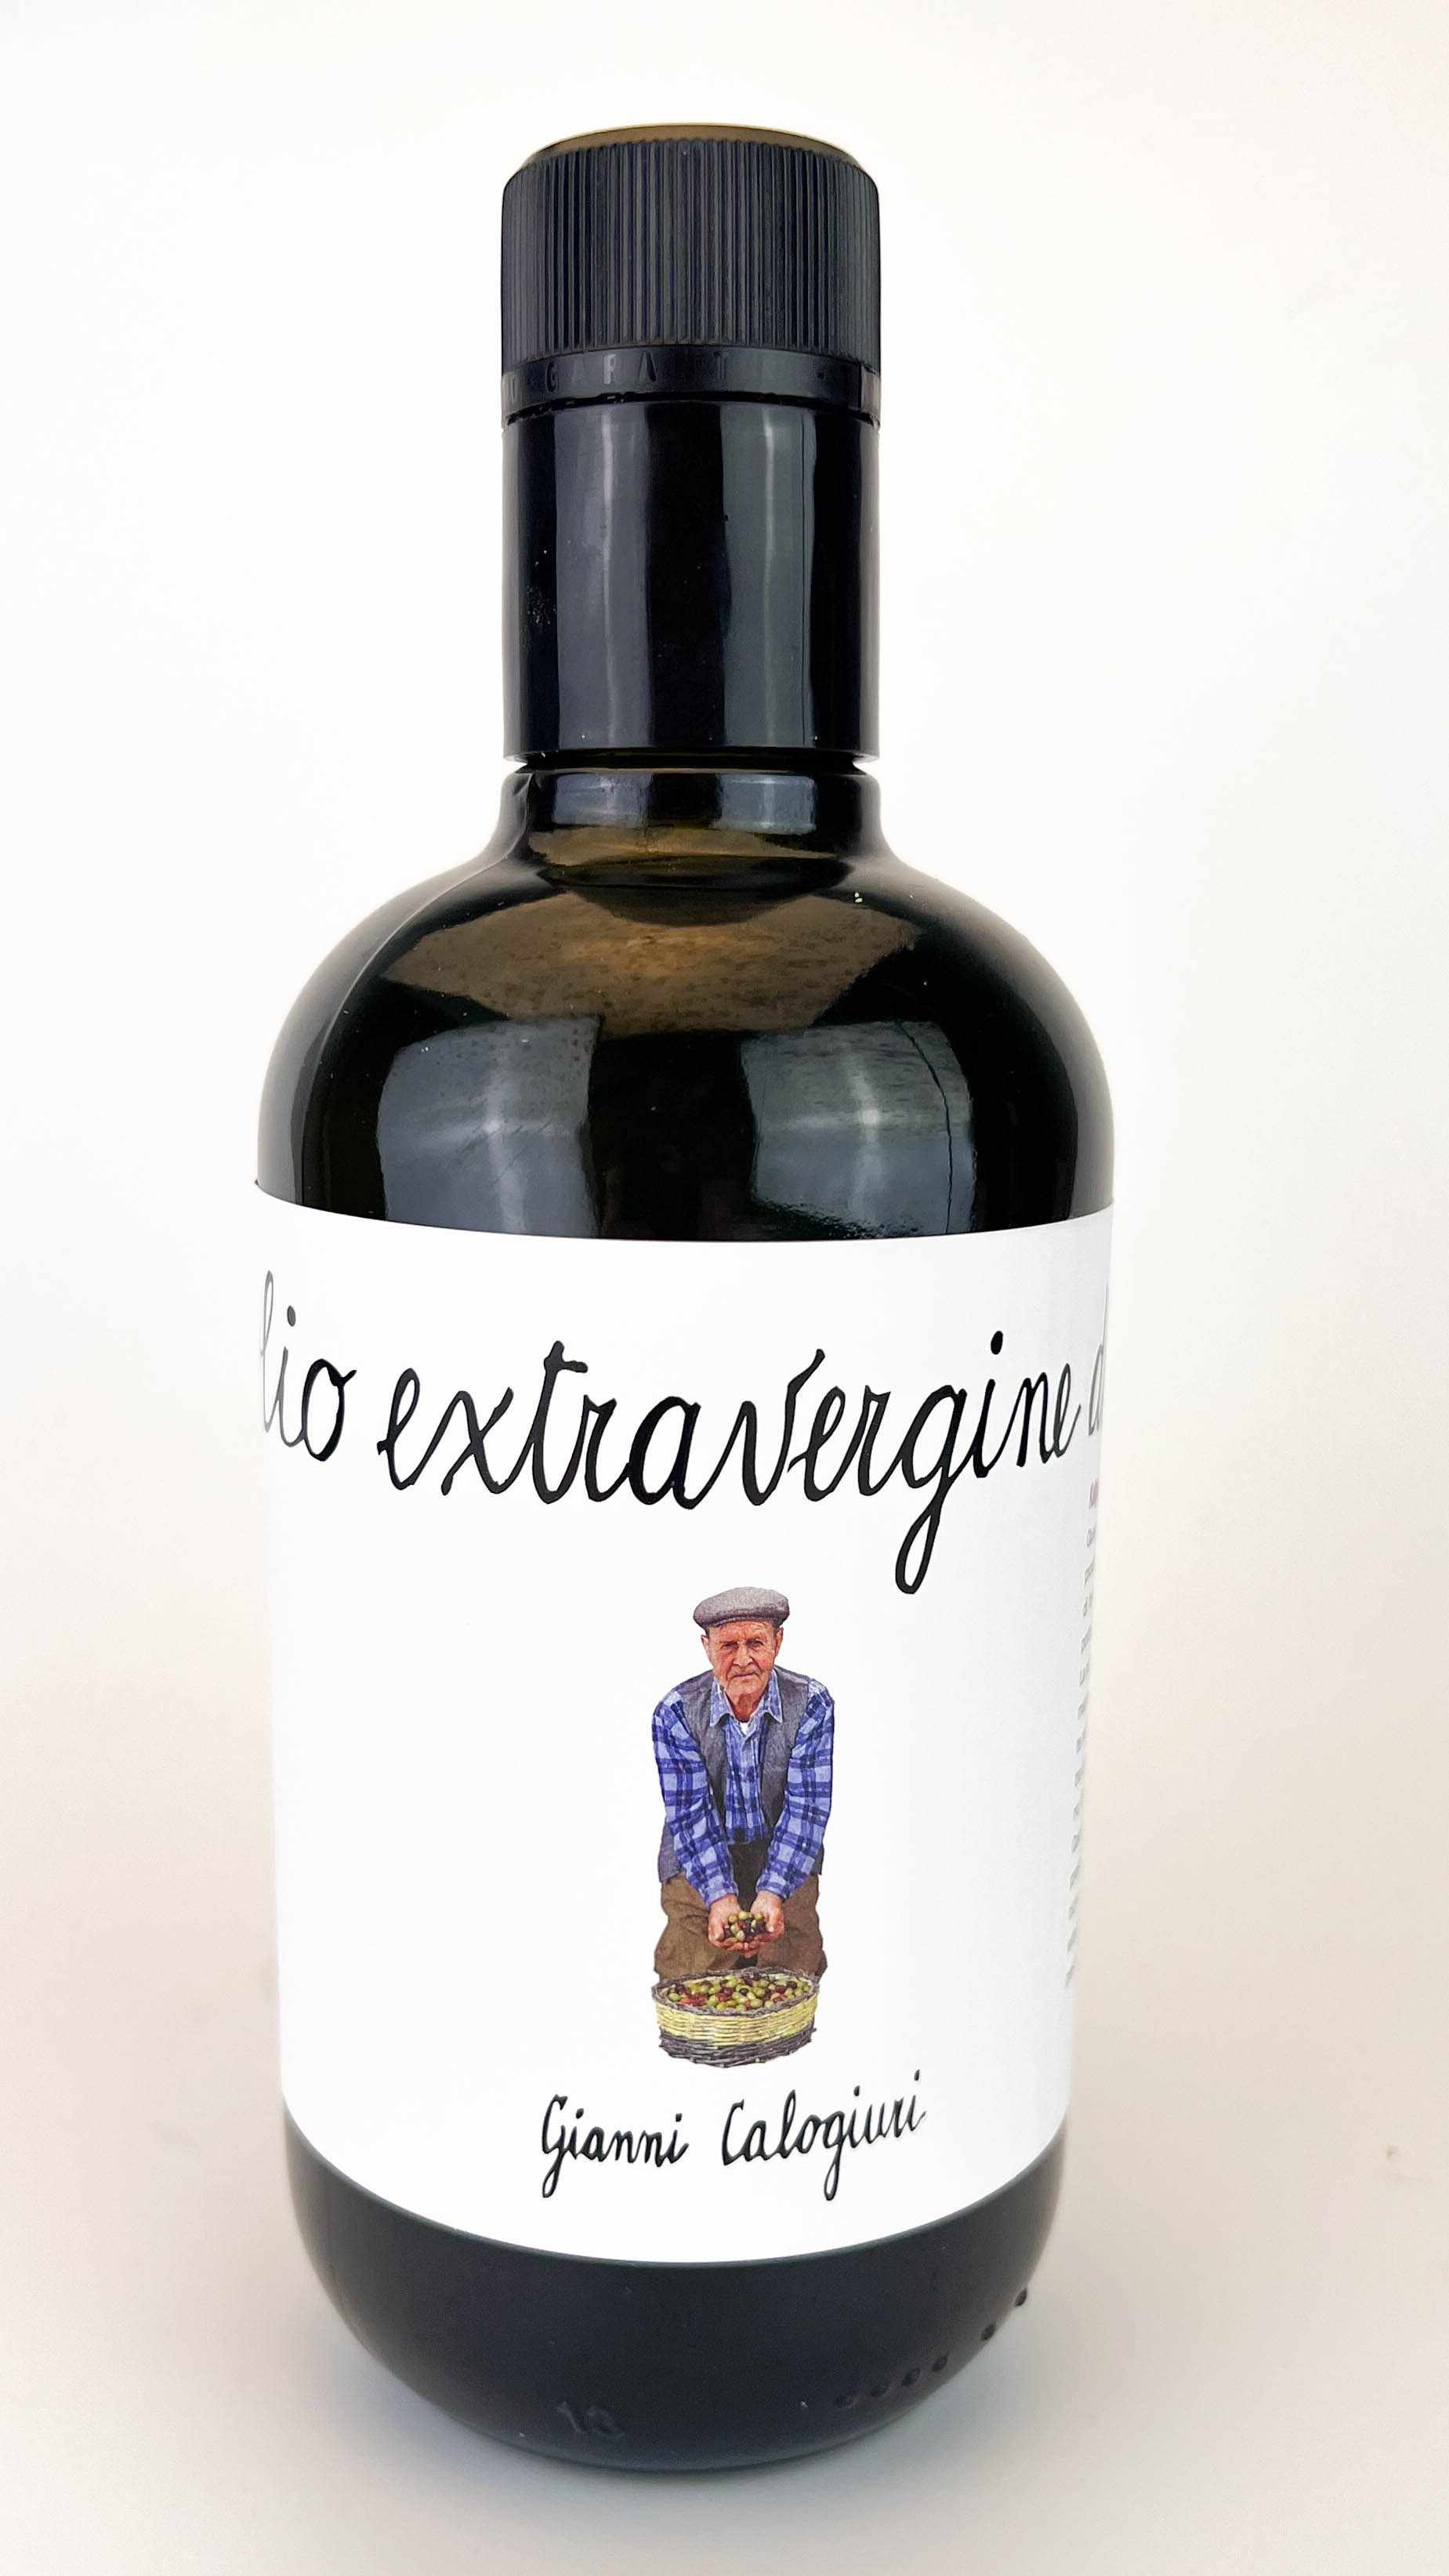 Gianni Calogiuri Extra Virgin Olive Oil 500ml